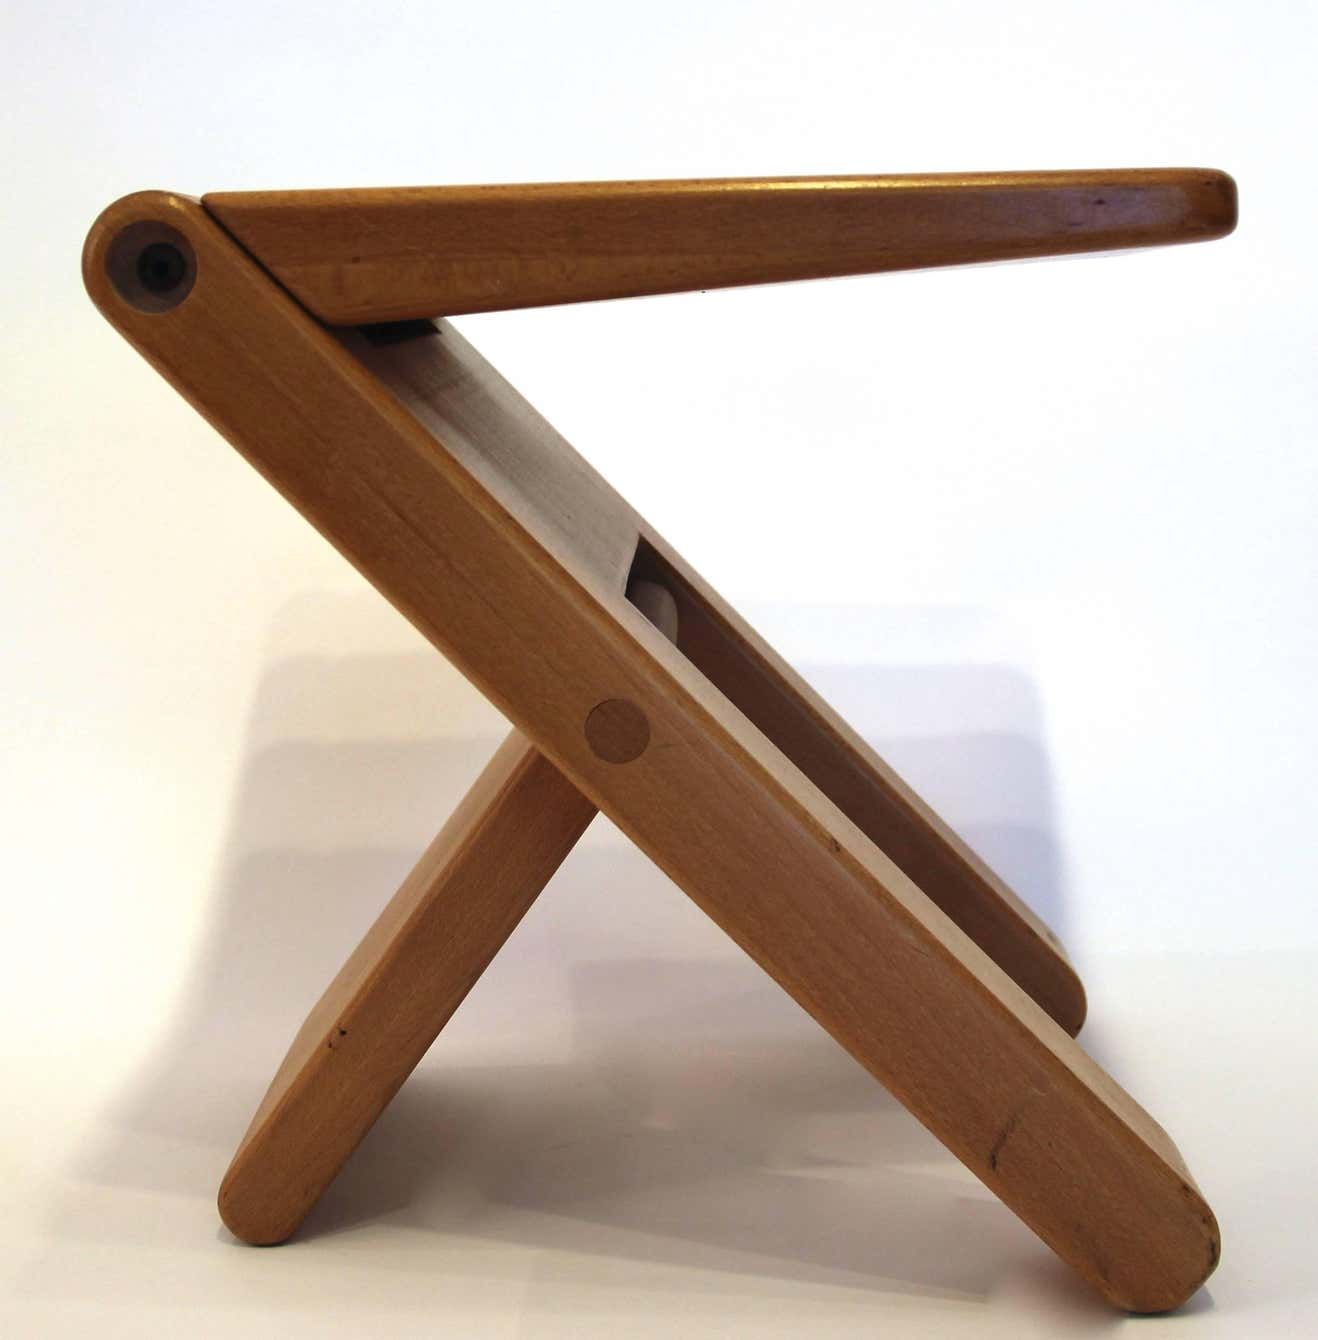 Modern folding stool ideas for your home
  decor